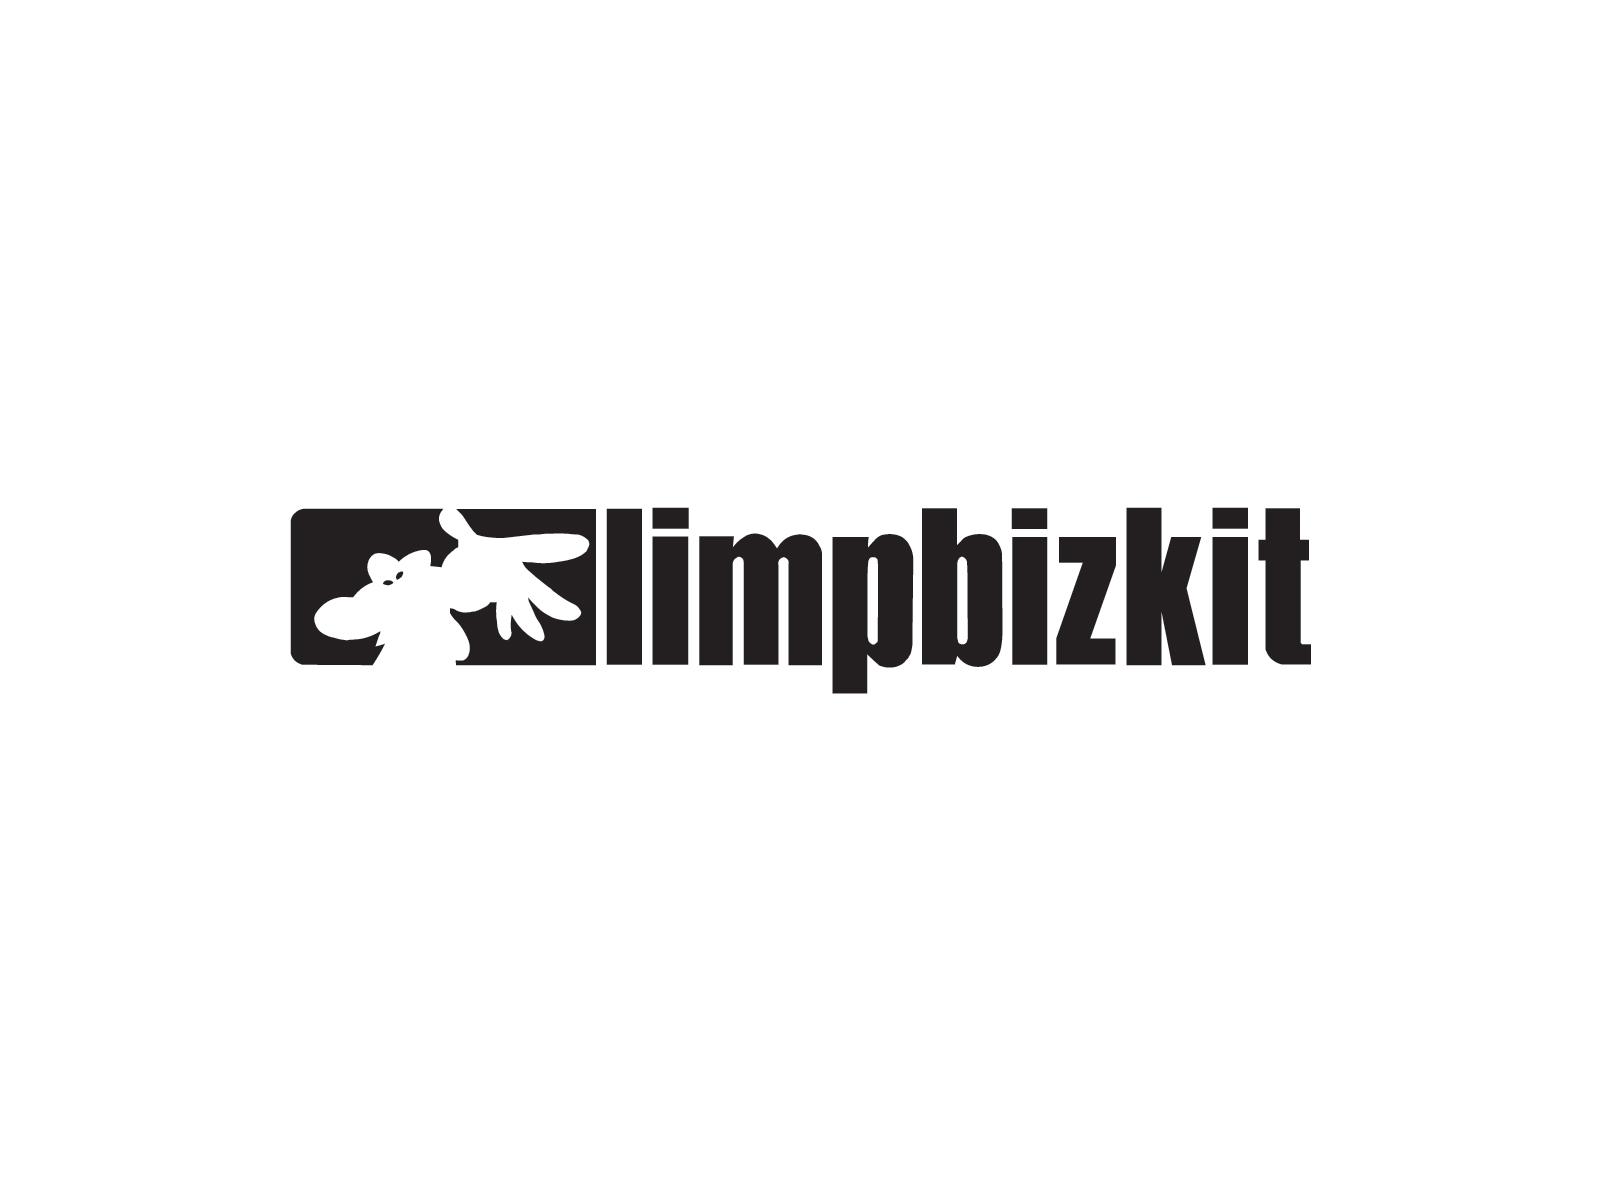 Limp Bizkit at 1024 x 768 size wallpapers HD quality